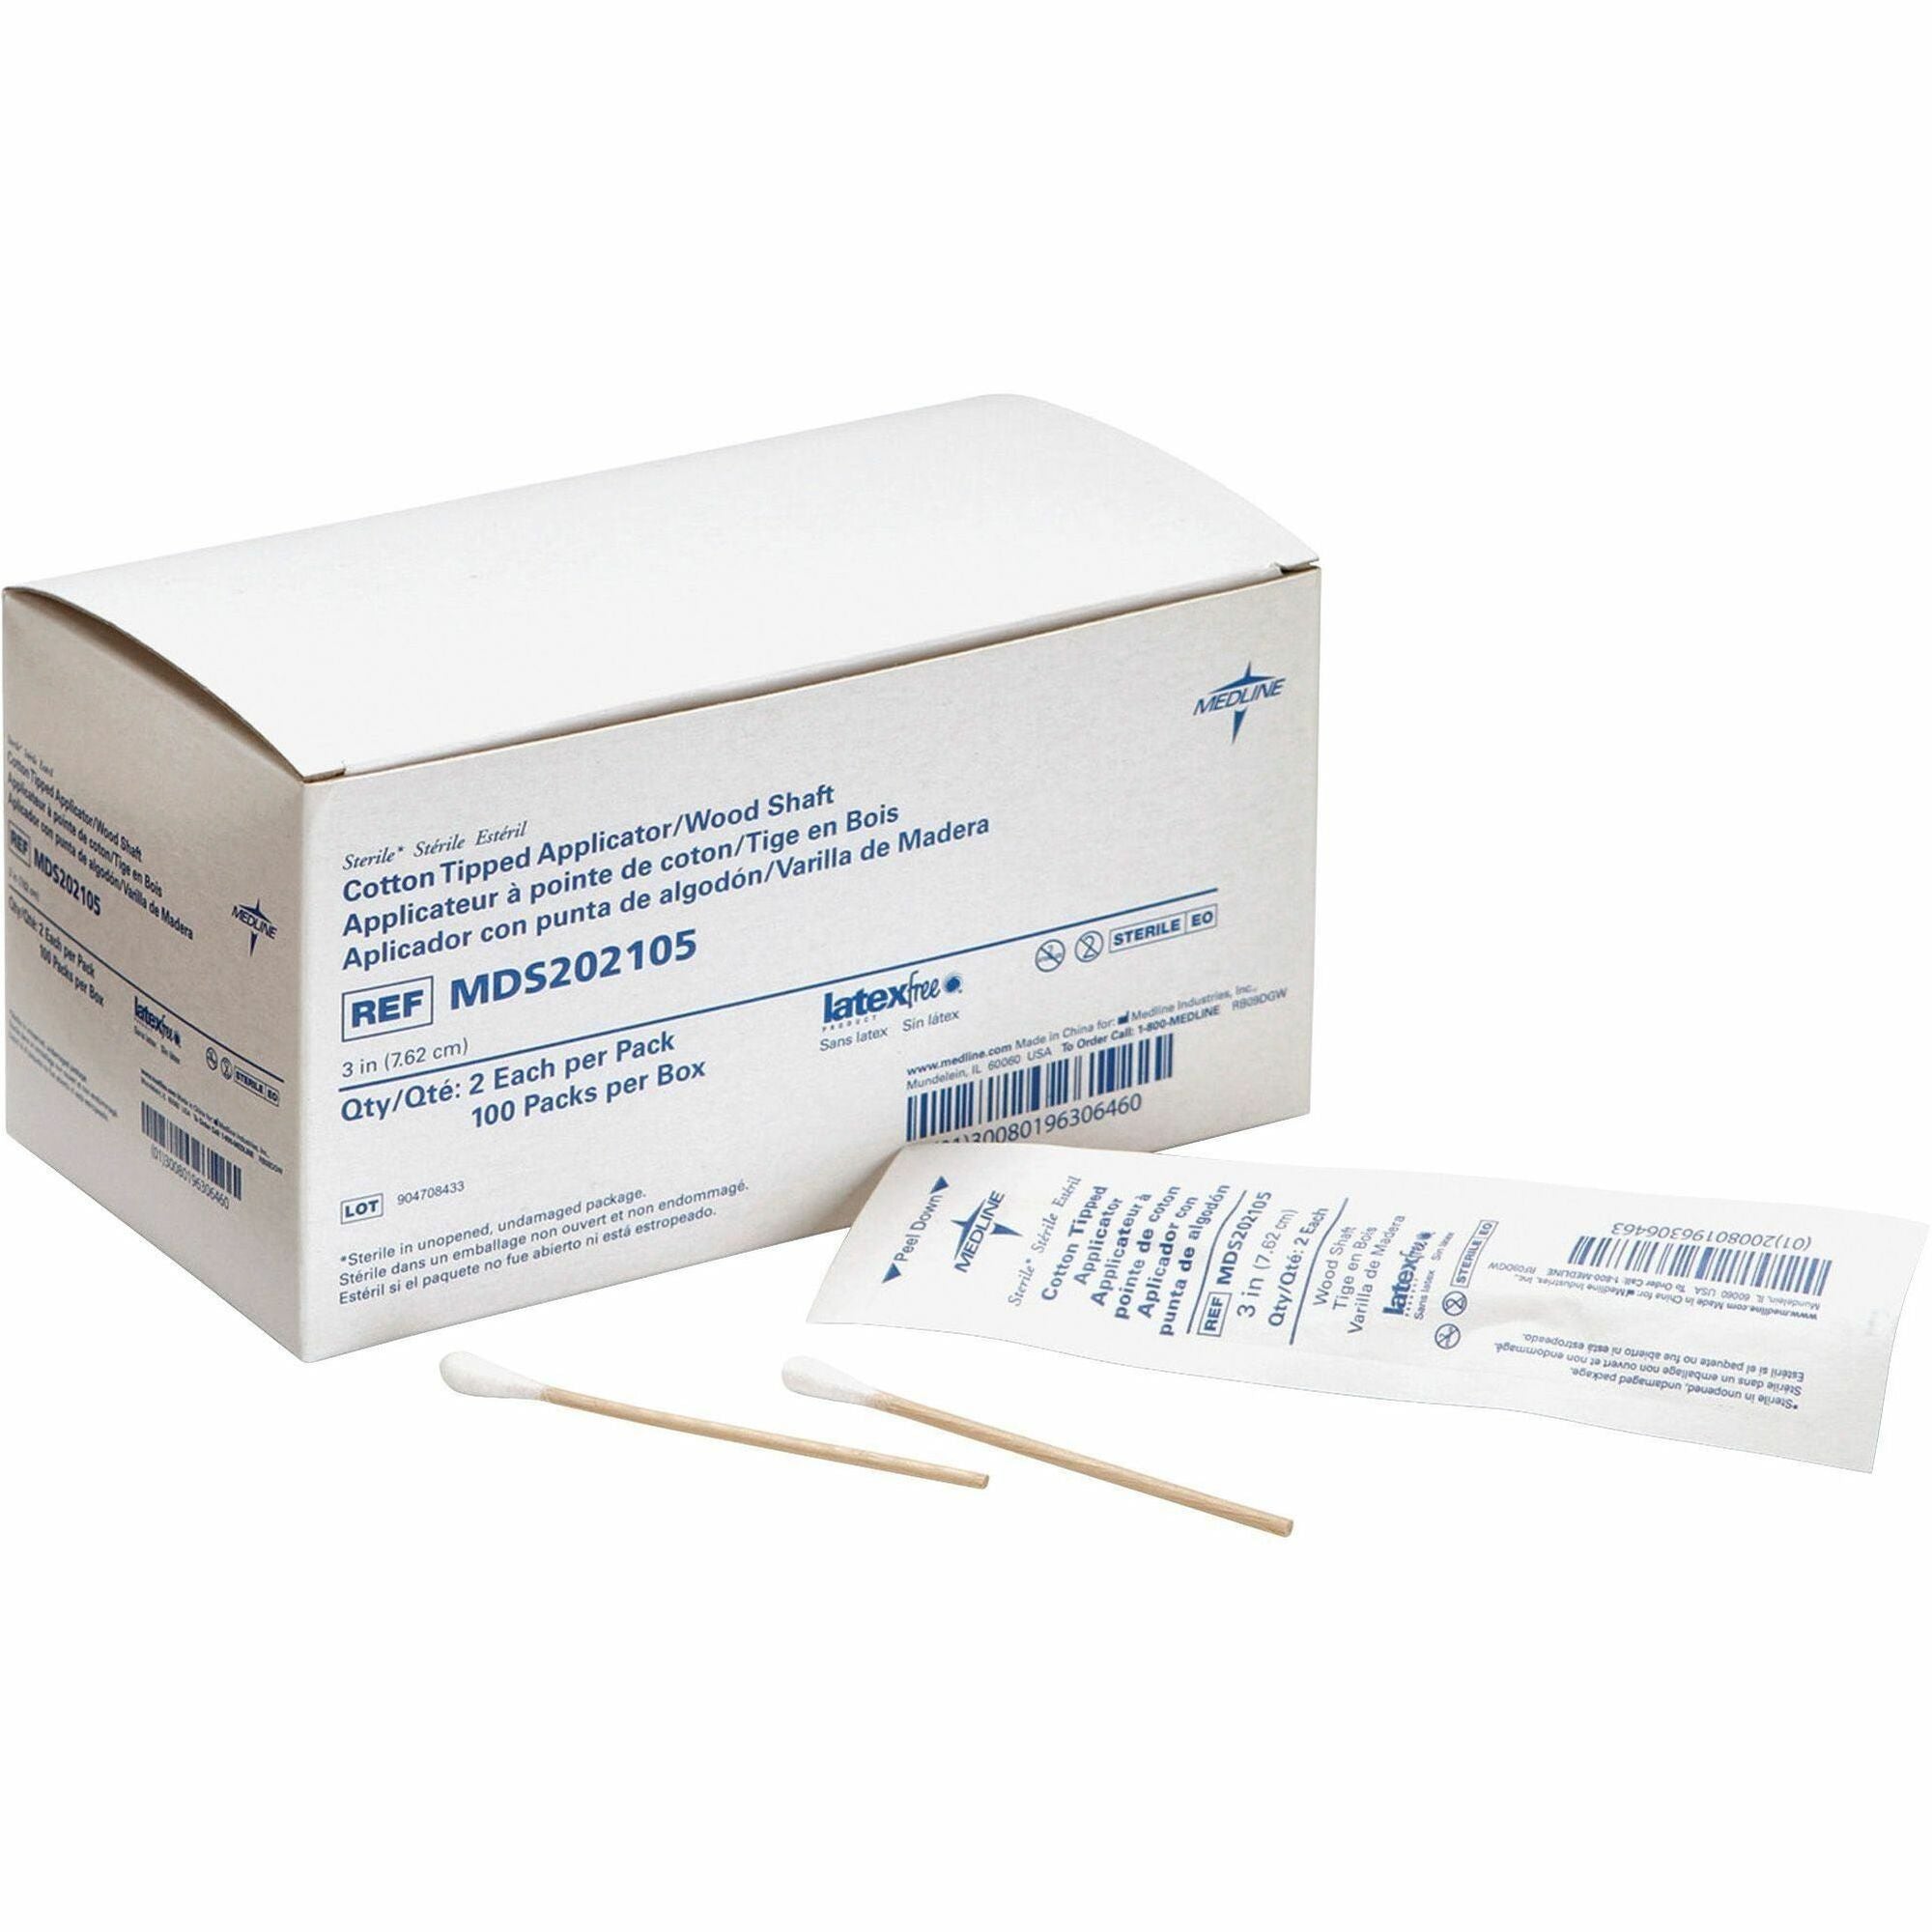 Medline Sterile Cotton-Tipped Applicators - 200/Box - White